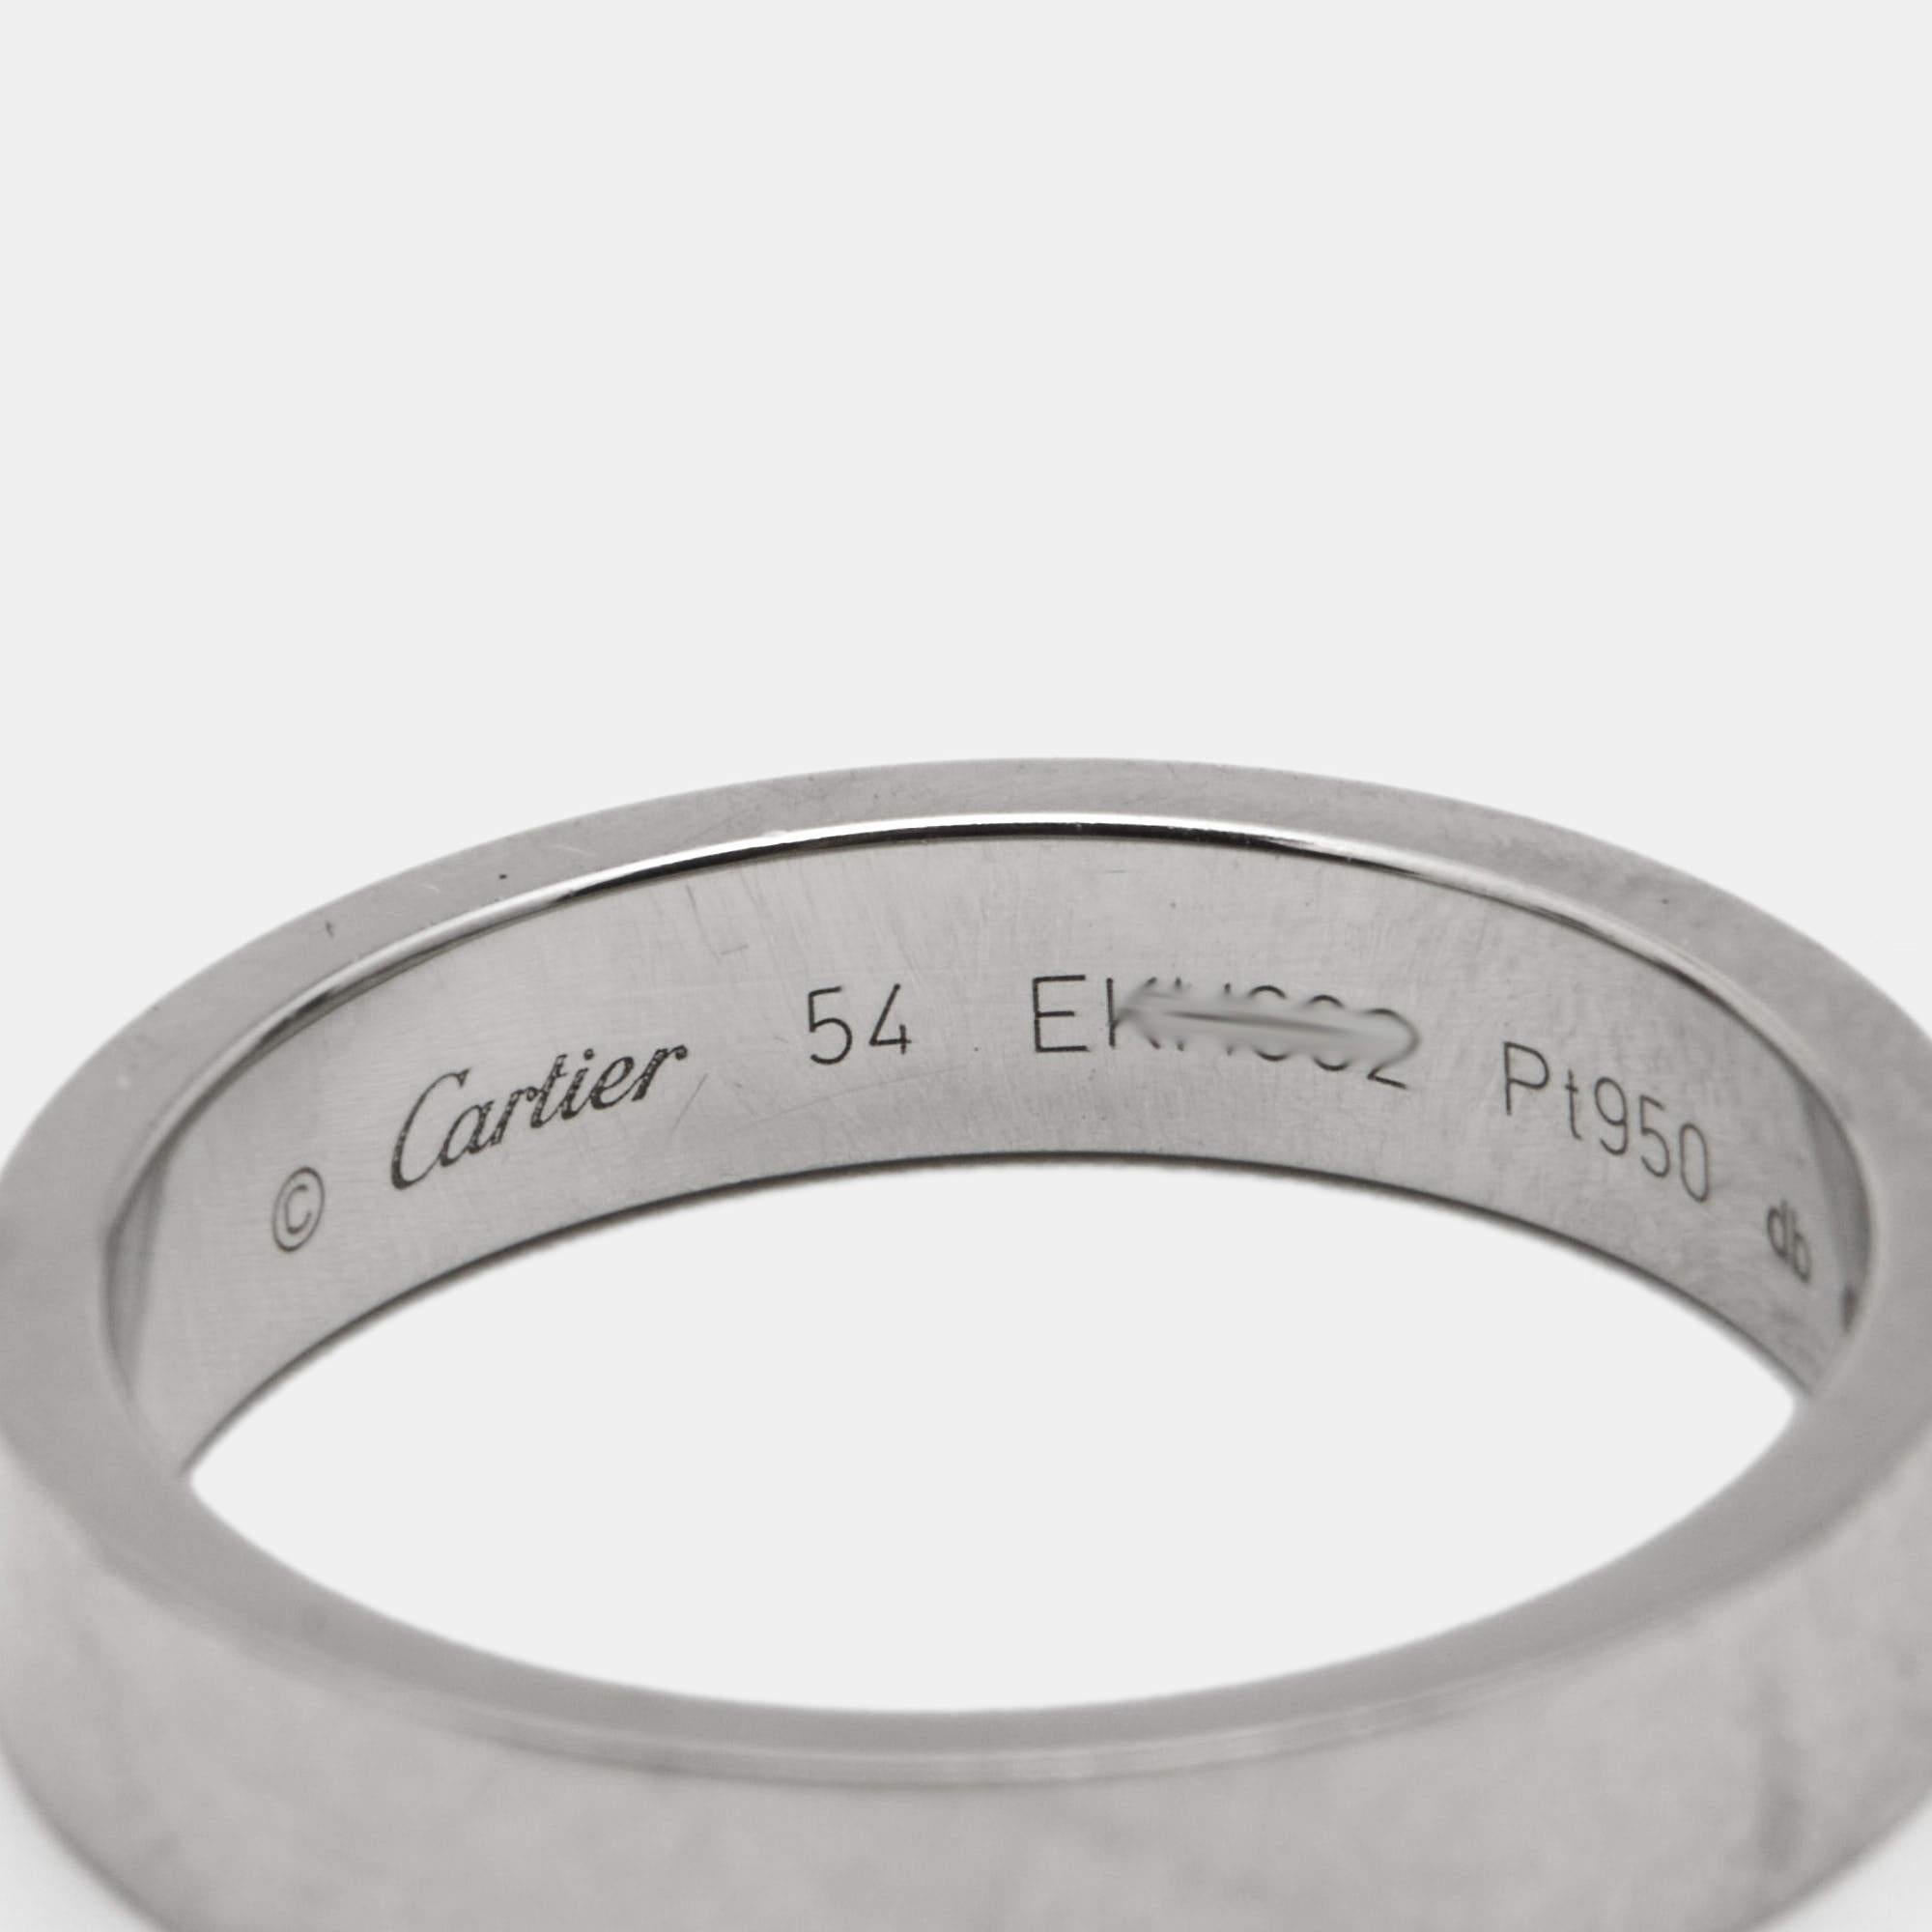 Cartier C De Cartier Platinum Wedding Band Ring Size 54 2